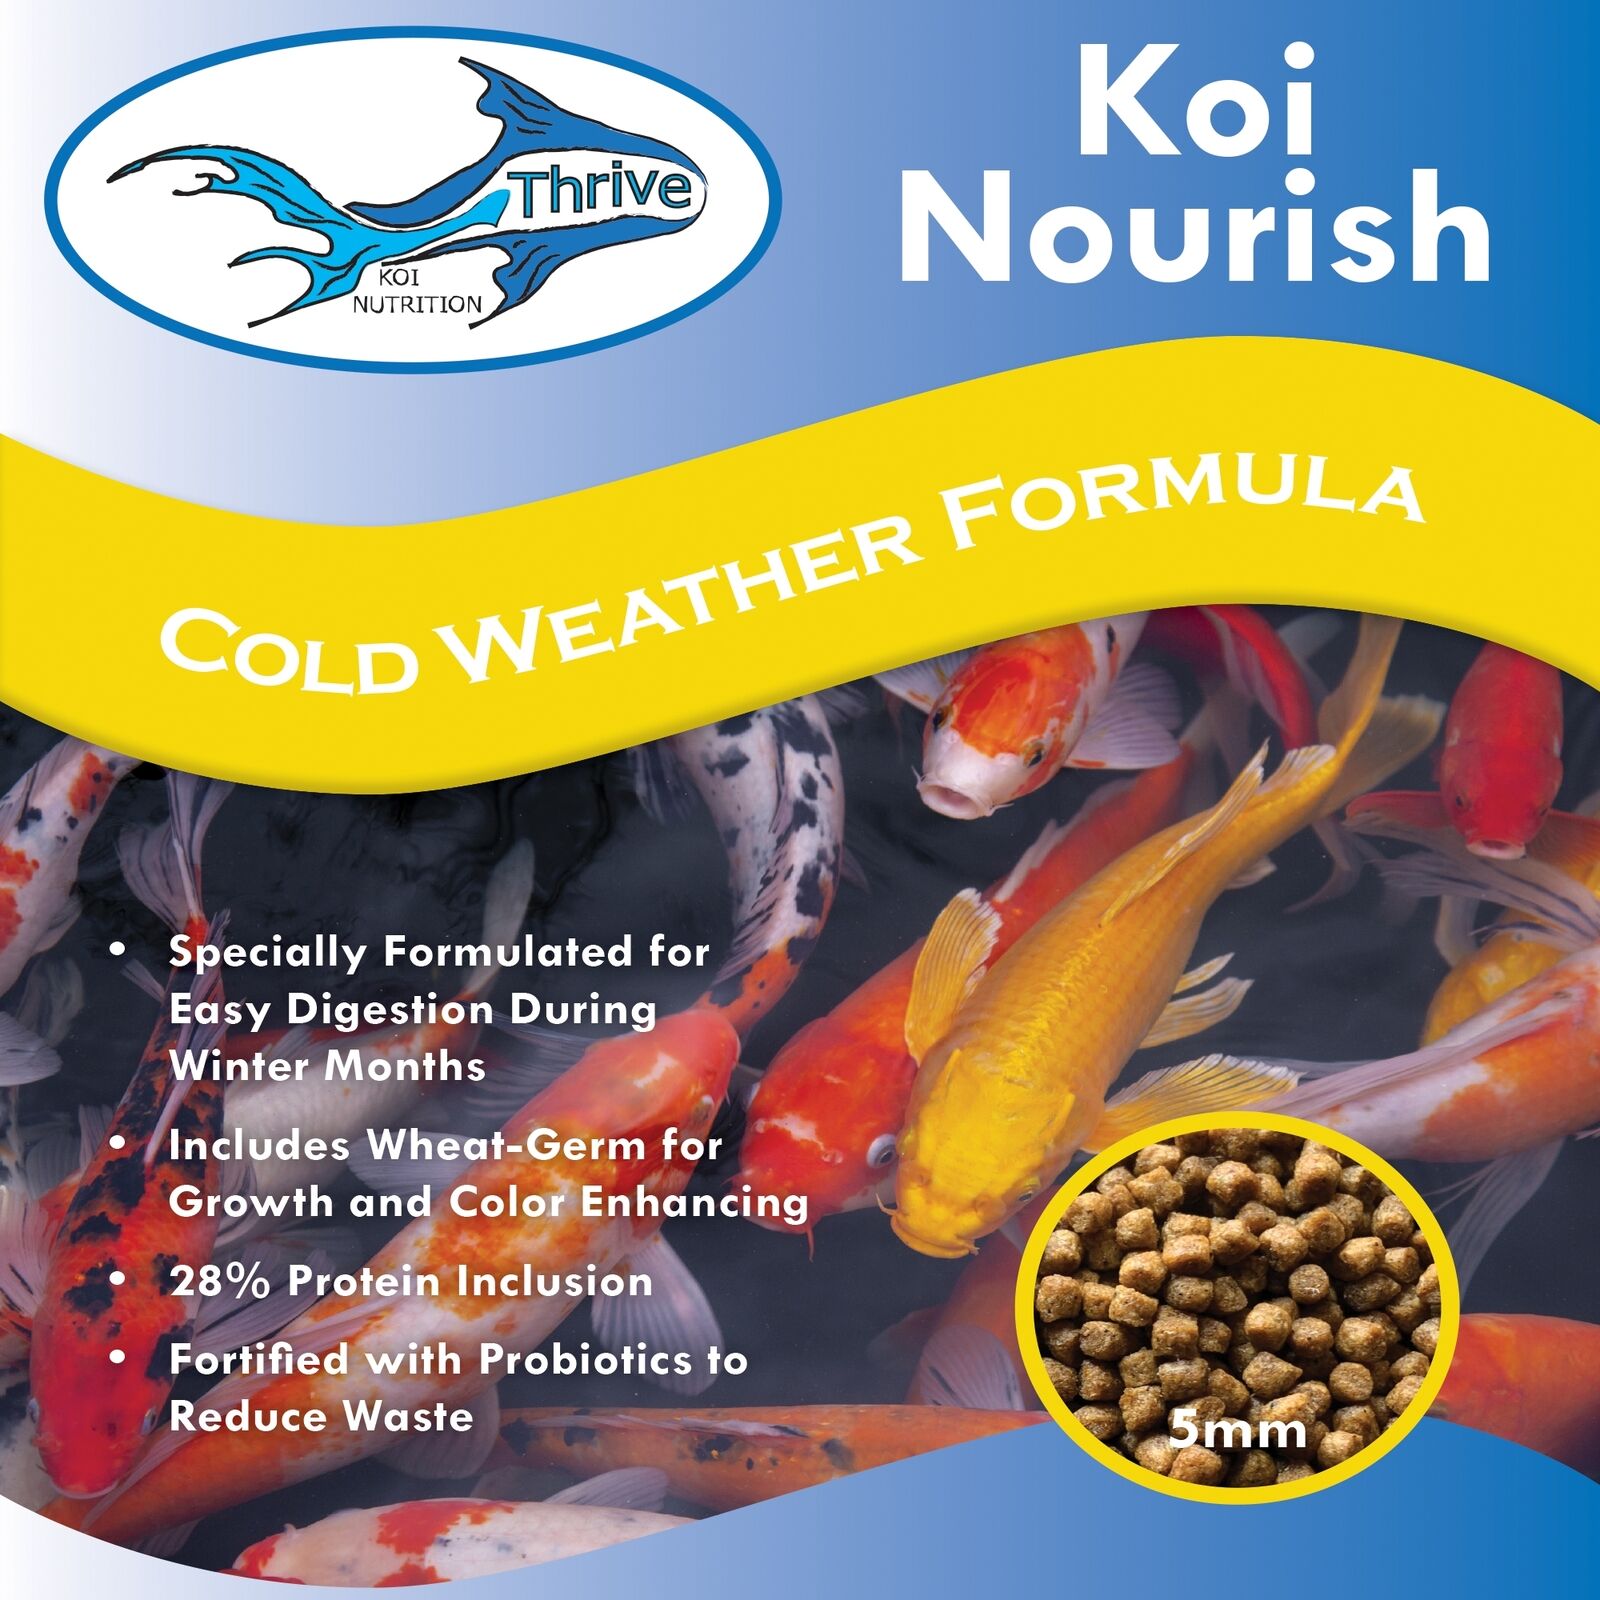 Thrive Koi Nourish Cool Water Diet Koi Fish Food With Wheat Germ - 250lb box